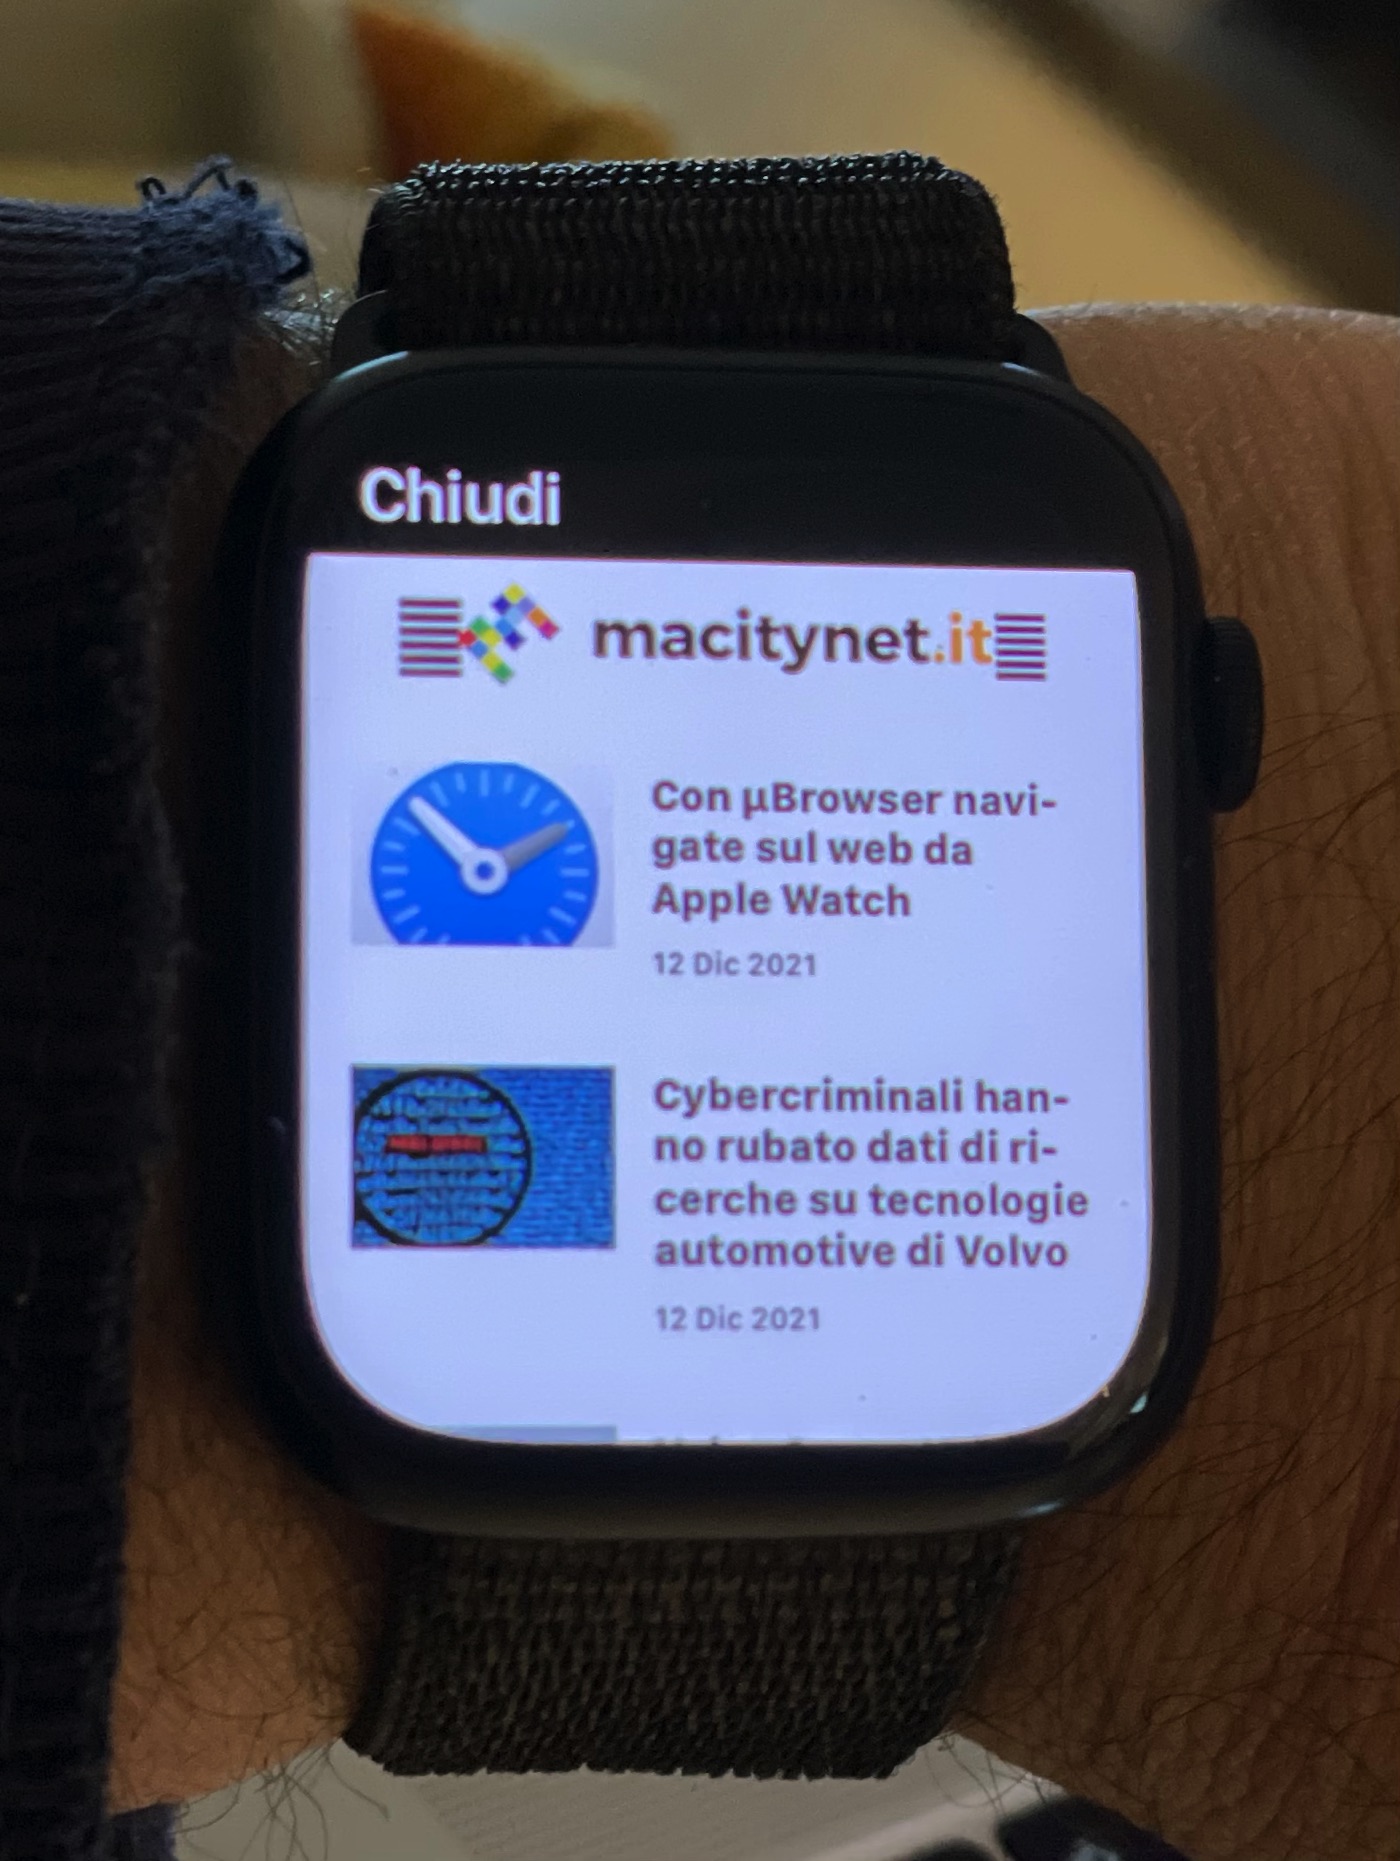 Con µBrowser navigate sul web da Apple Watch